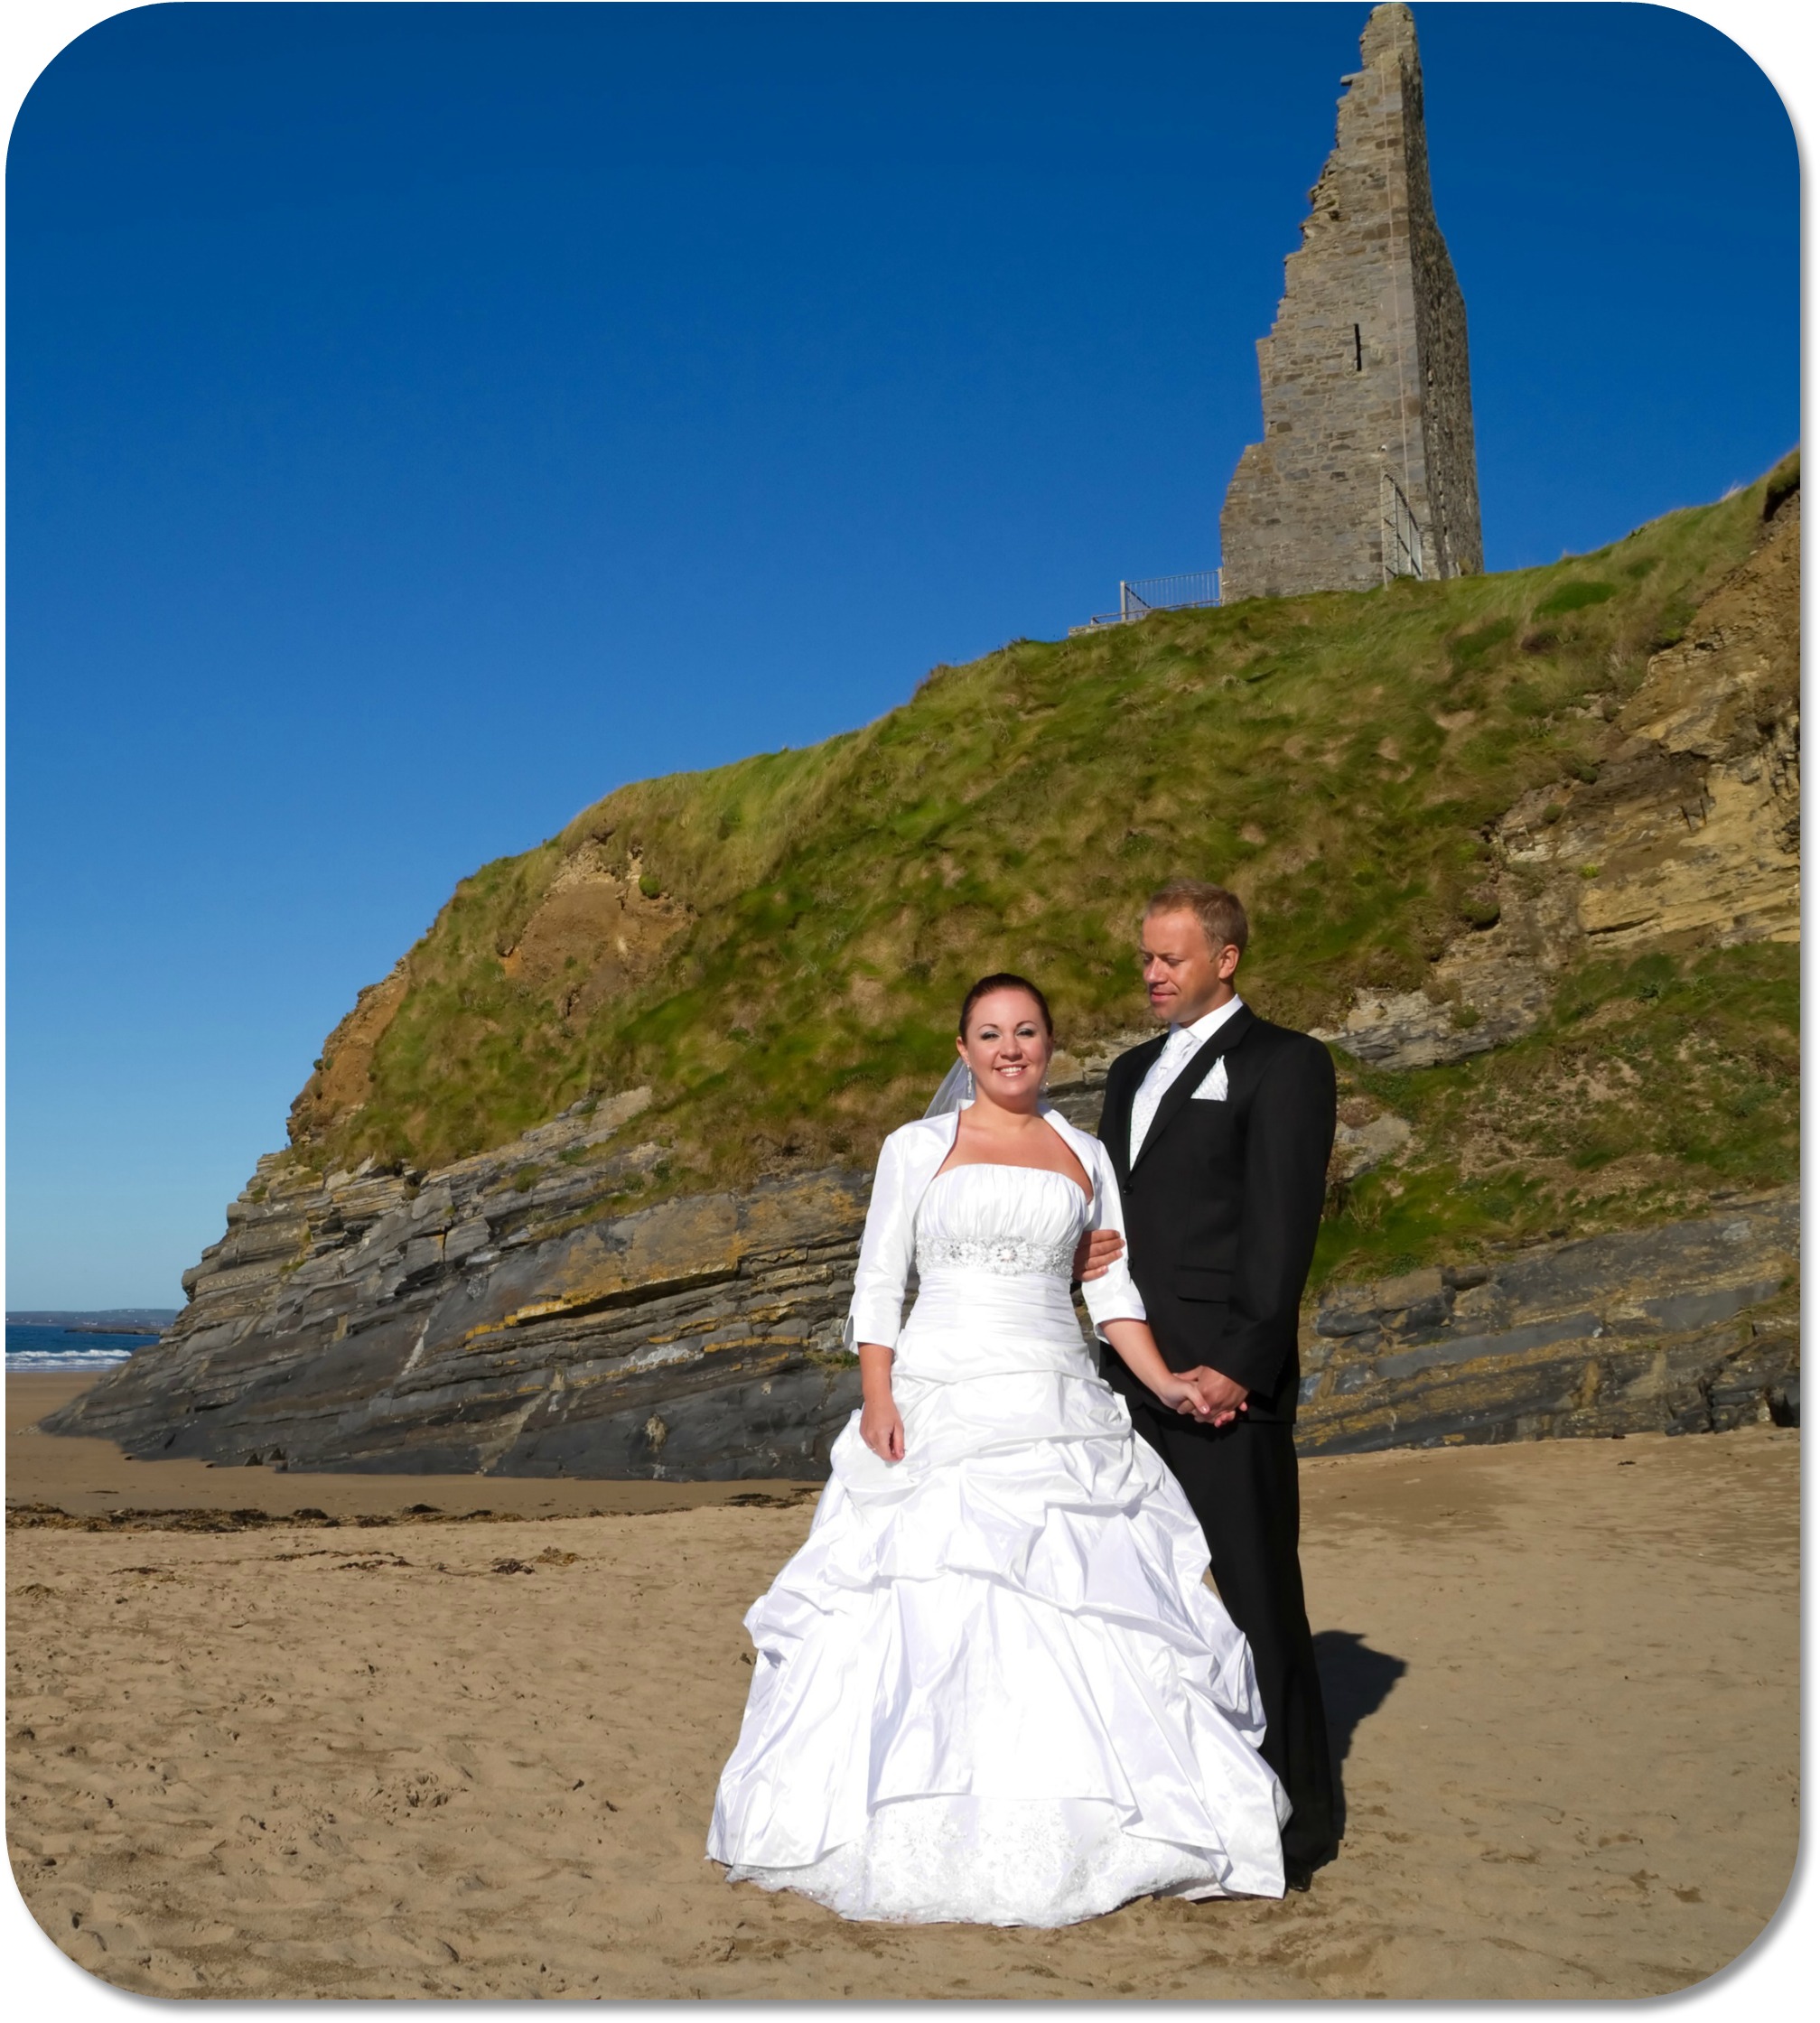 Irish Expressions:  Short Irish Wedding Blessings.  Happy couple on the beach in wedding attire.